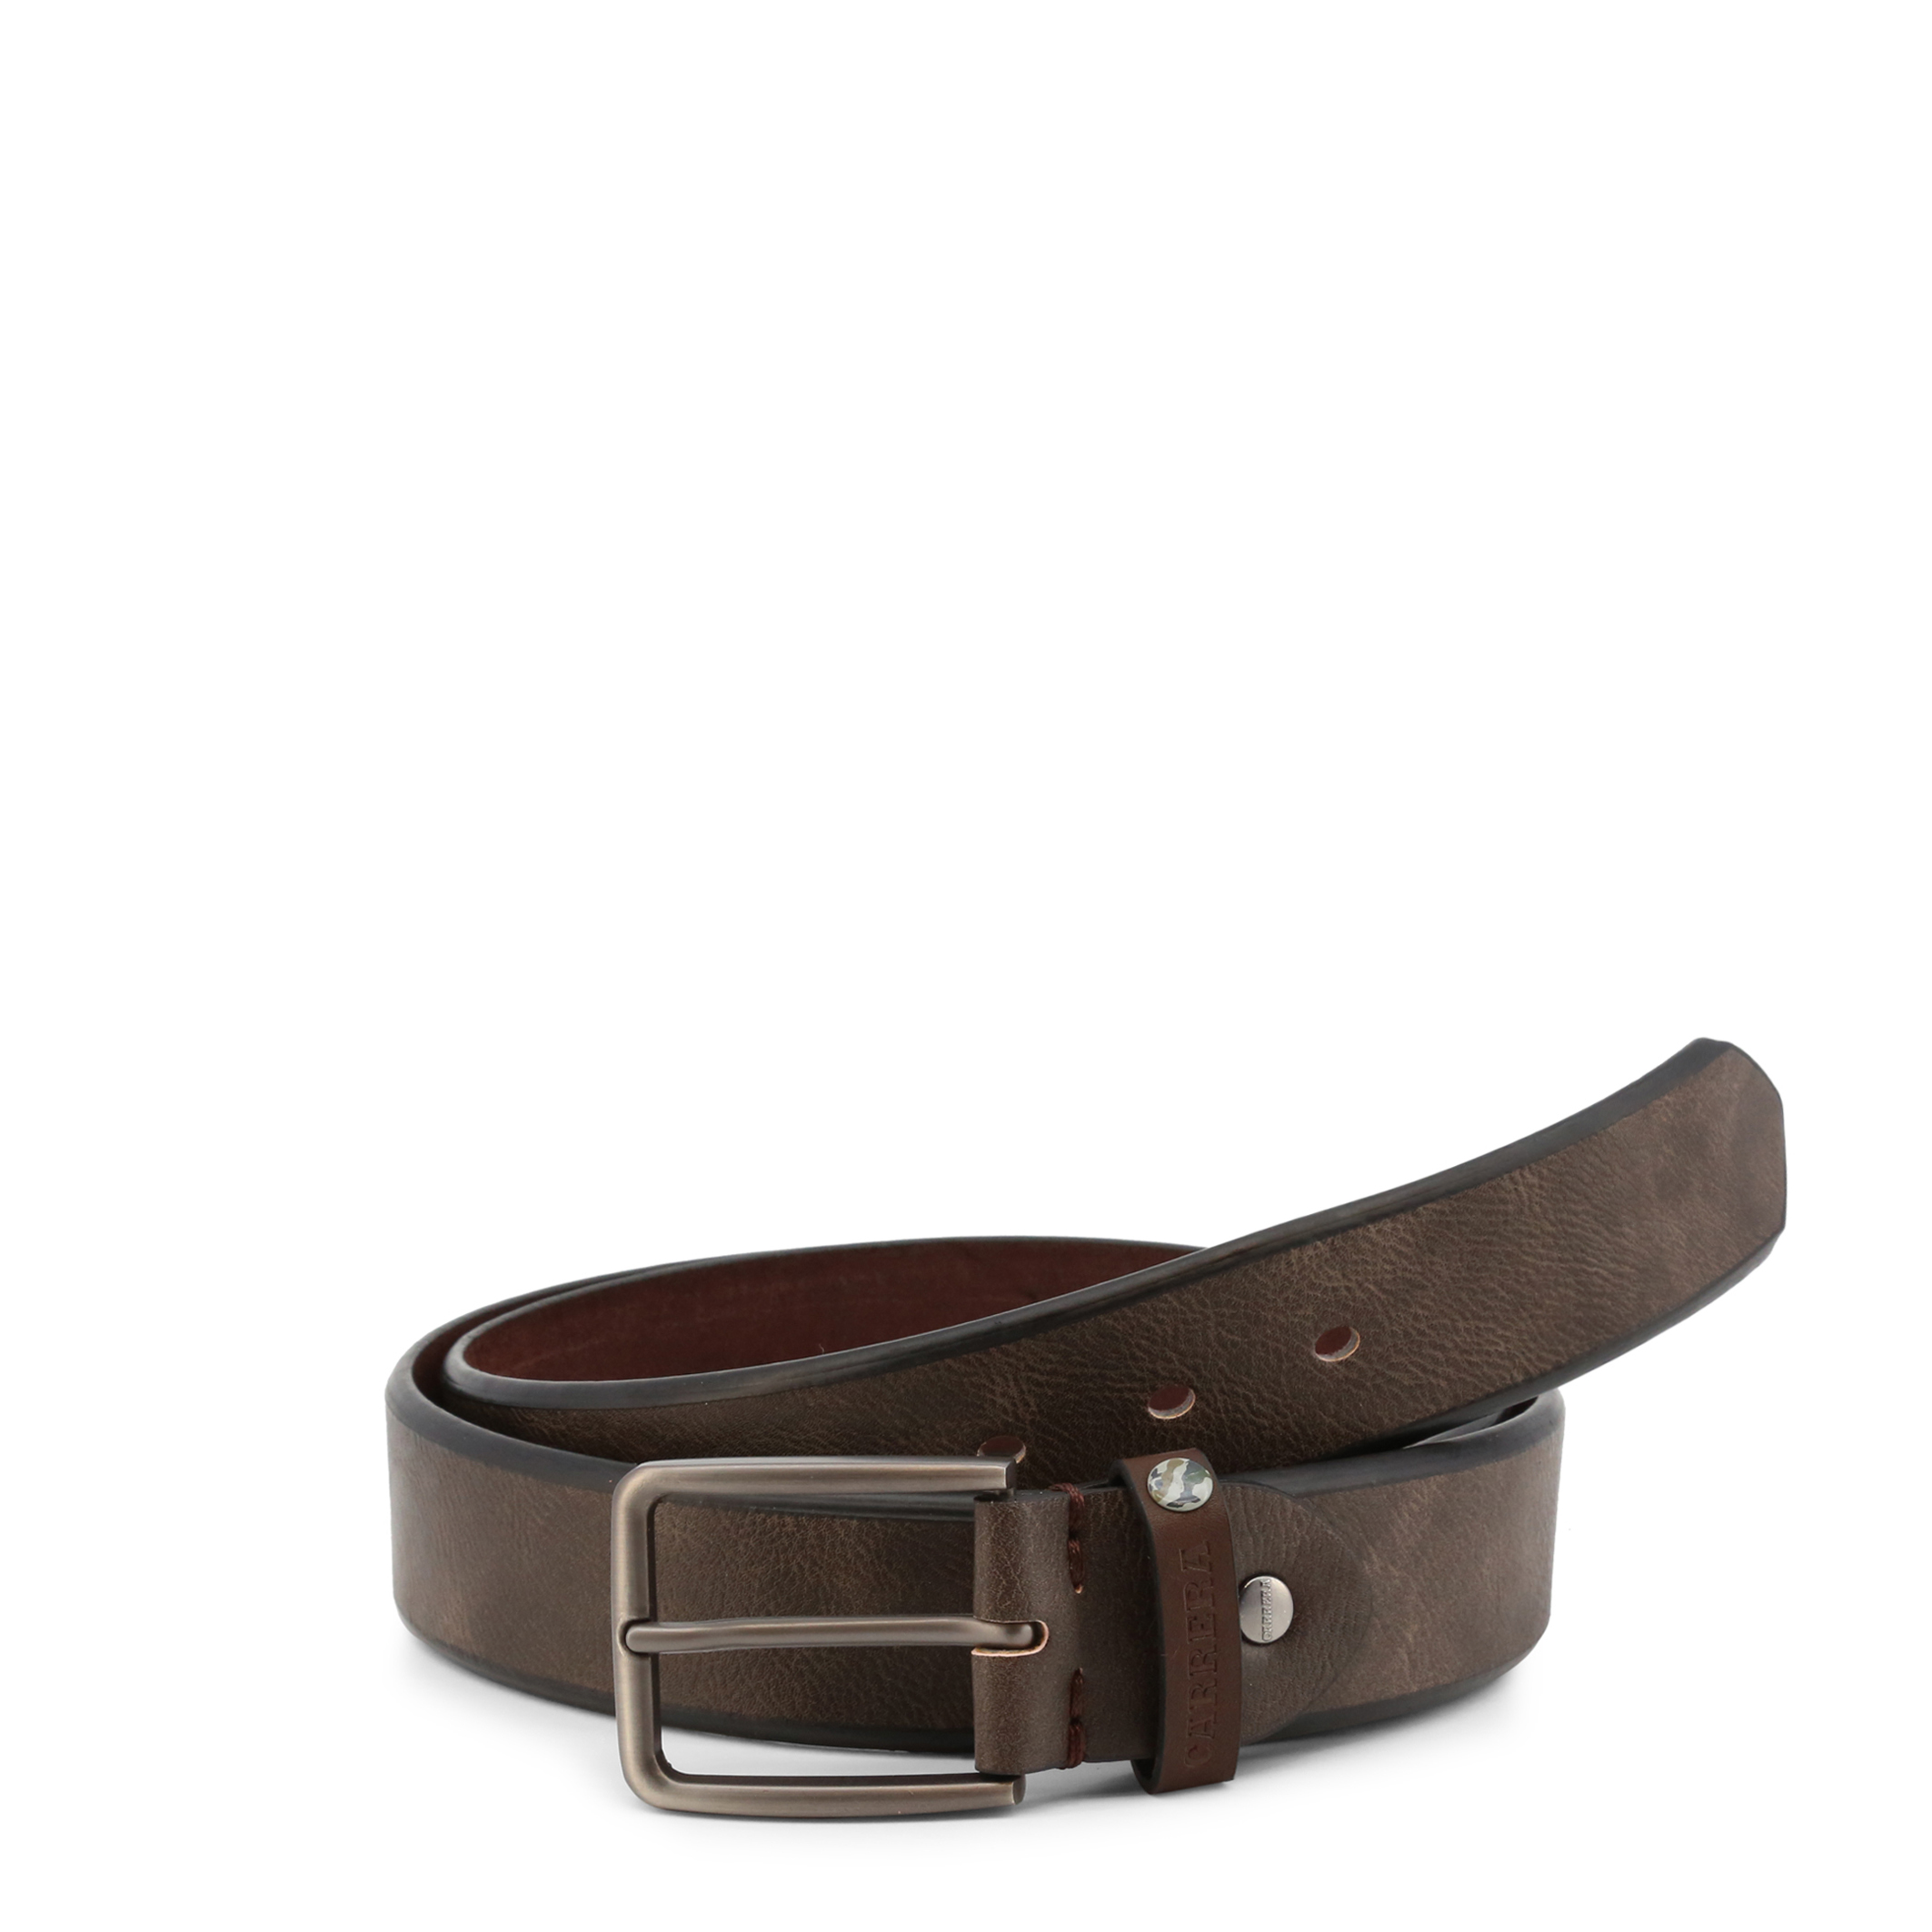 Carrera Jeans Brown Belts for Men - CATCHER_CB6715